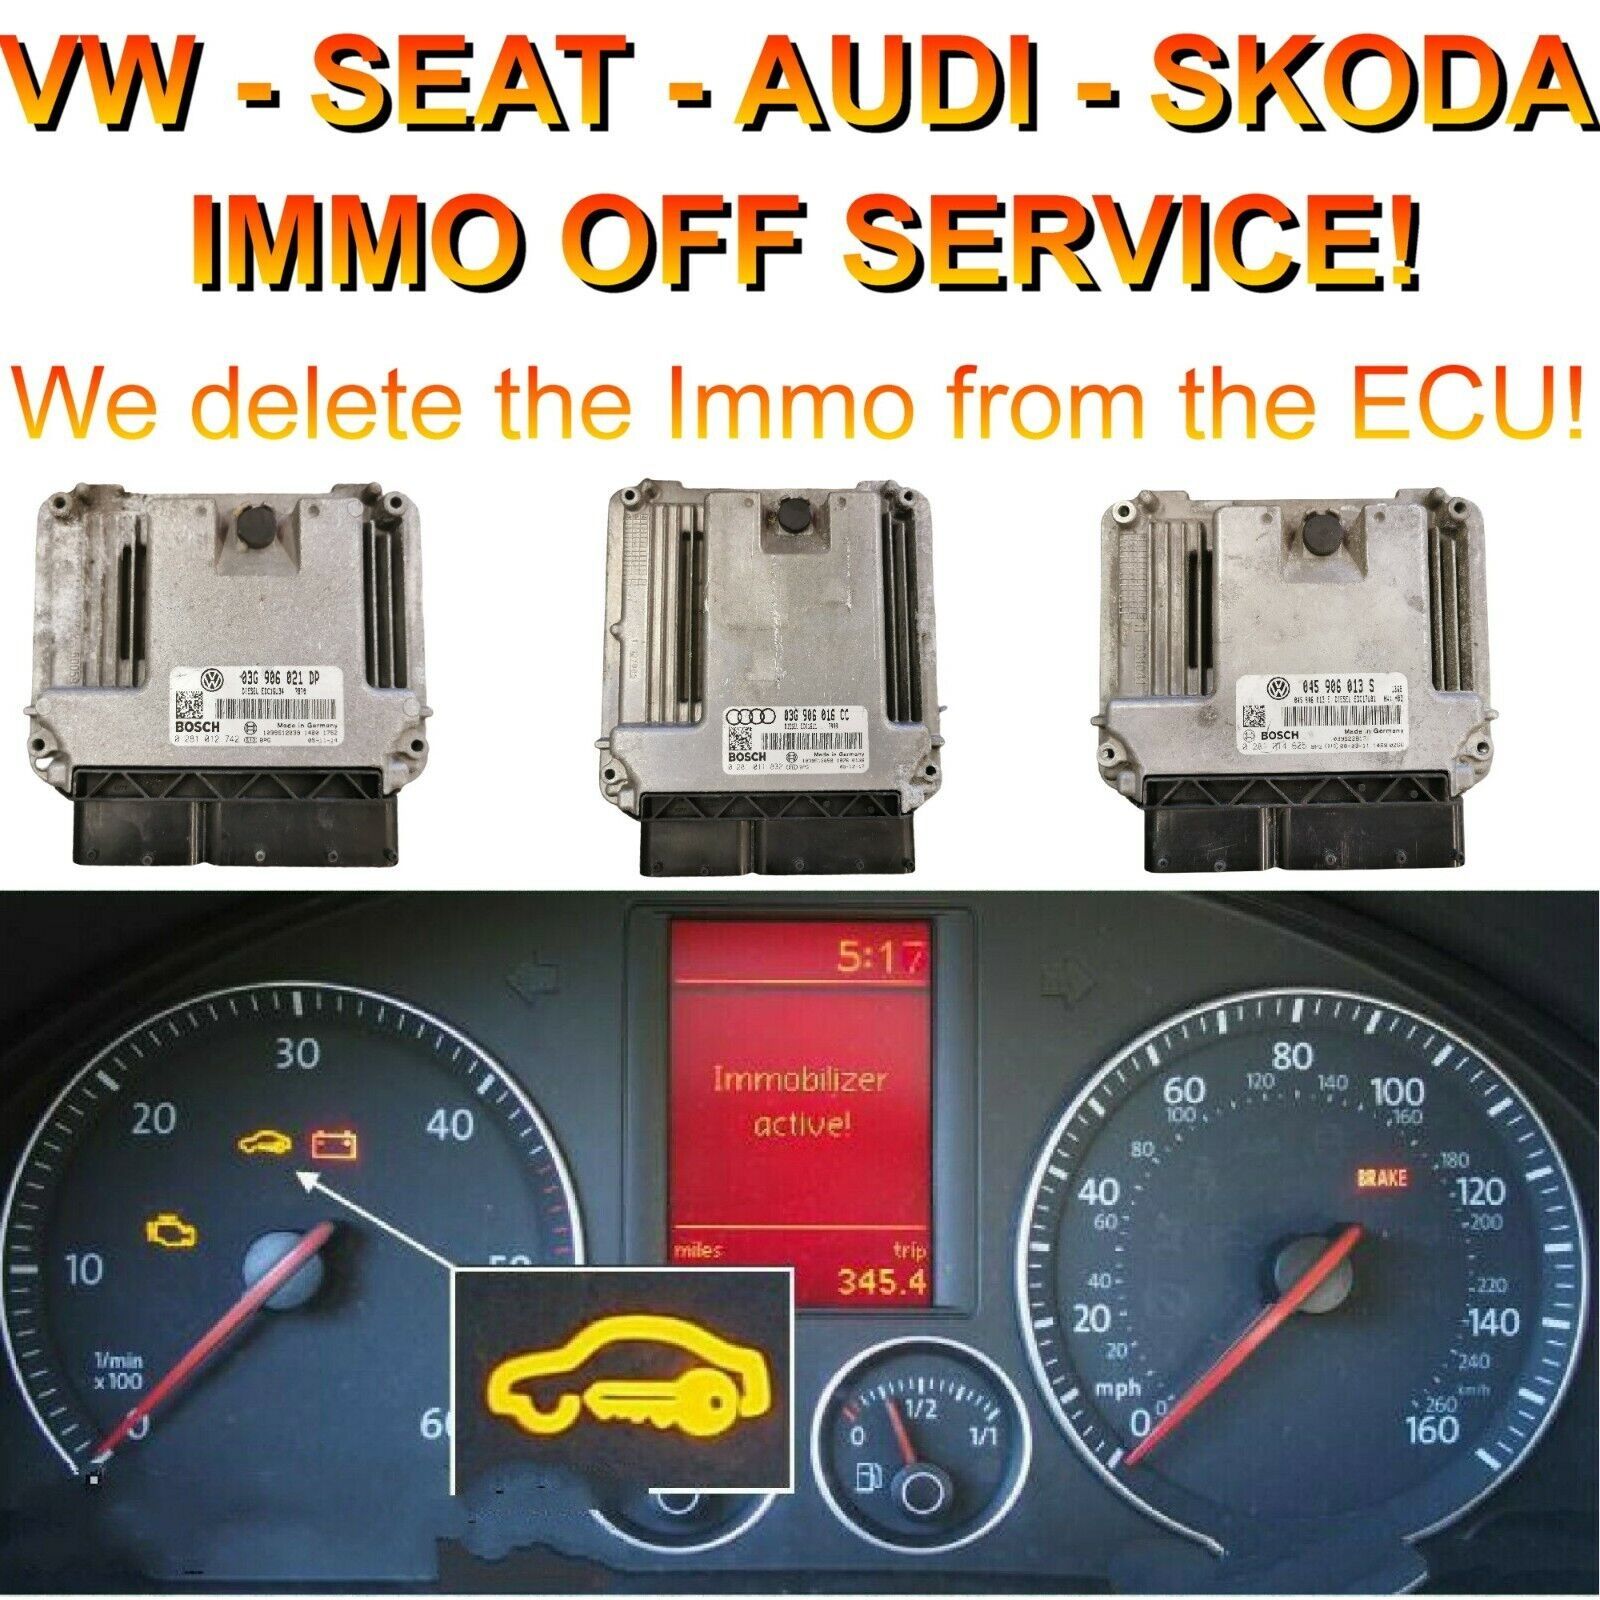 Remediere pornire grea la cald Vw Audi Seat Skoda /Golf 5 ECU HotStart